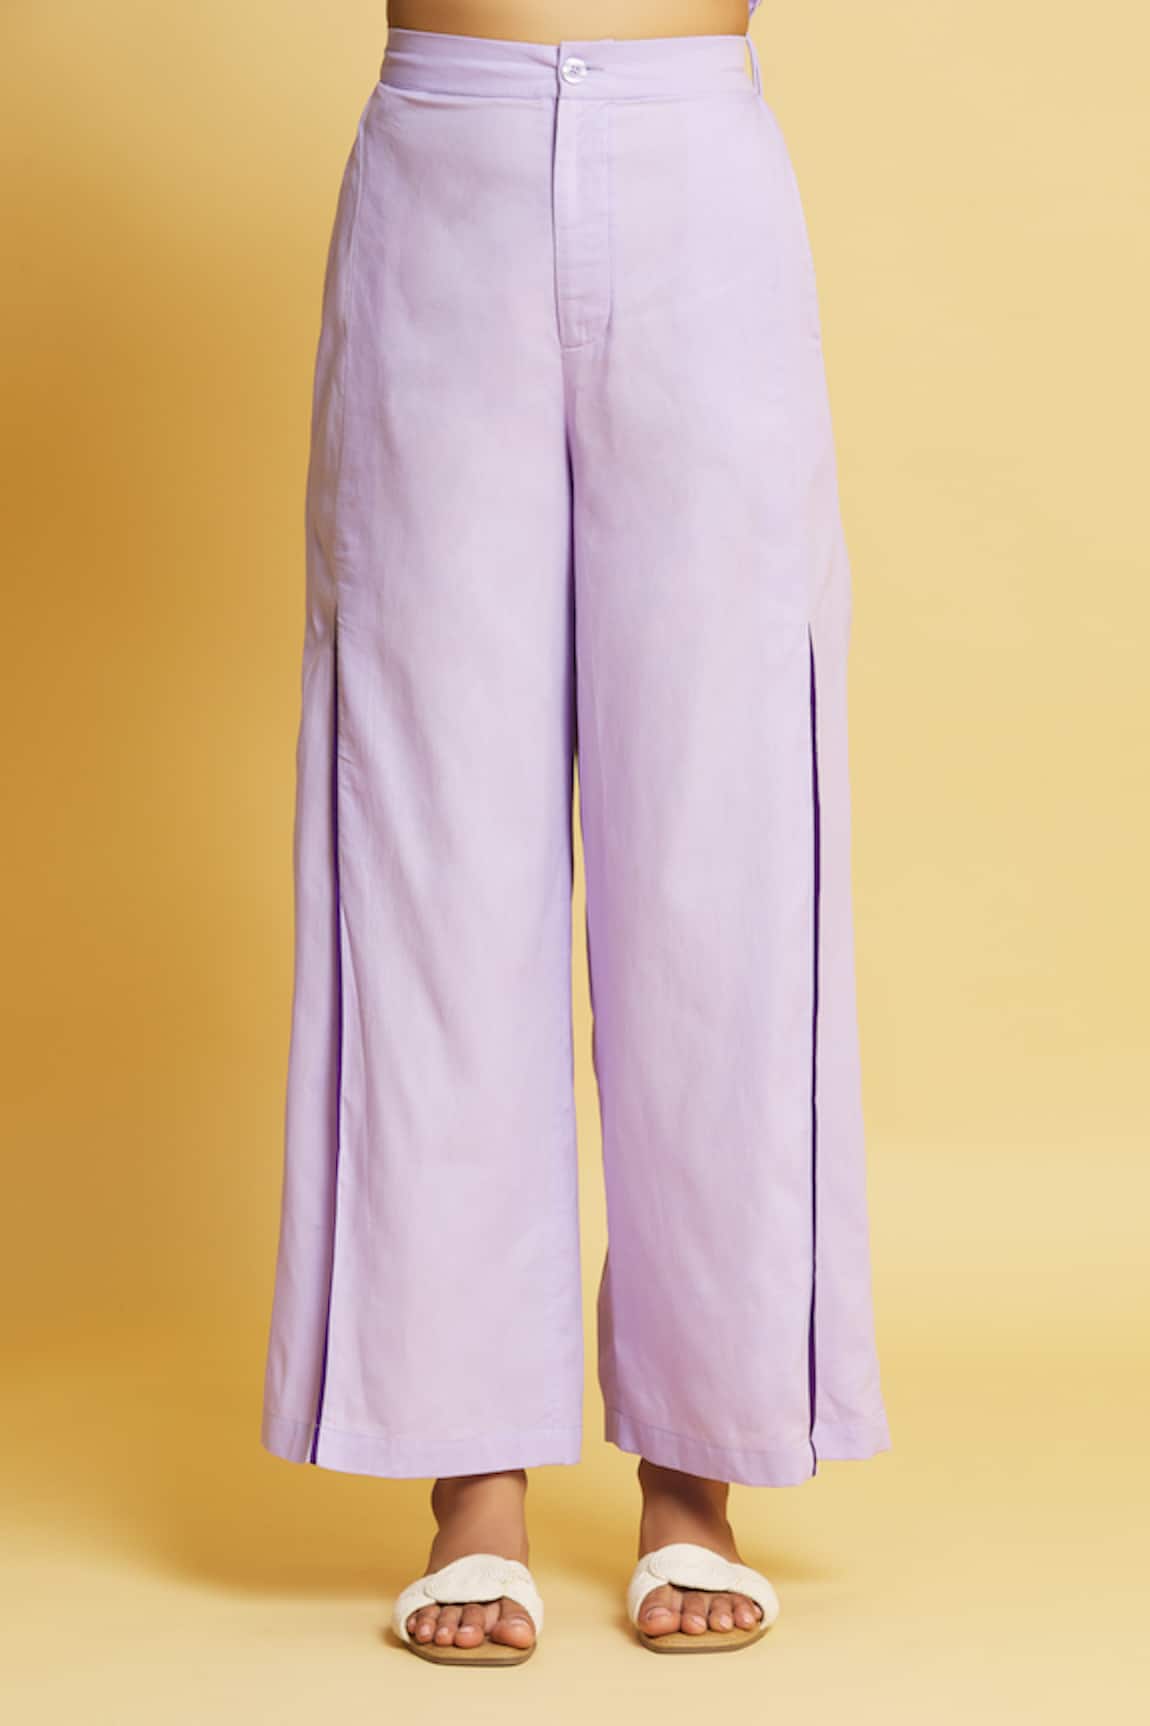 Paterson Pants  Wide Leg Lavender Corduroy Skate Pants LightPastel Purple   Mens  Phnm College